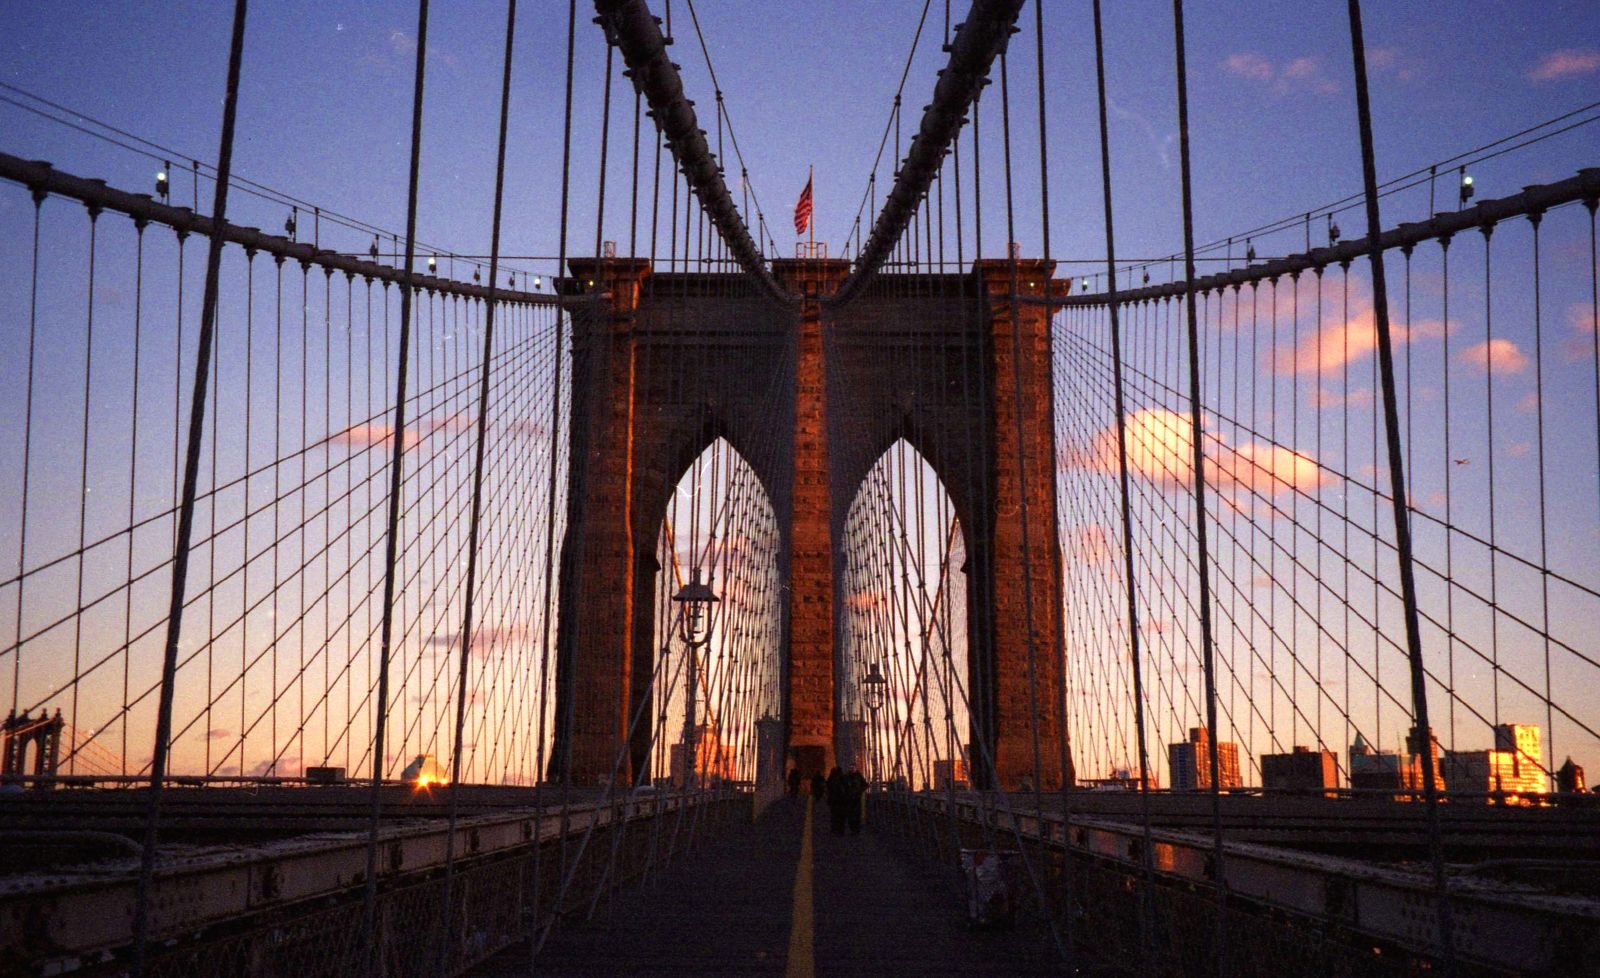 The 911 Memorial and Brooklyn Bridge Night Tour